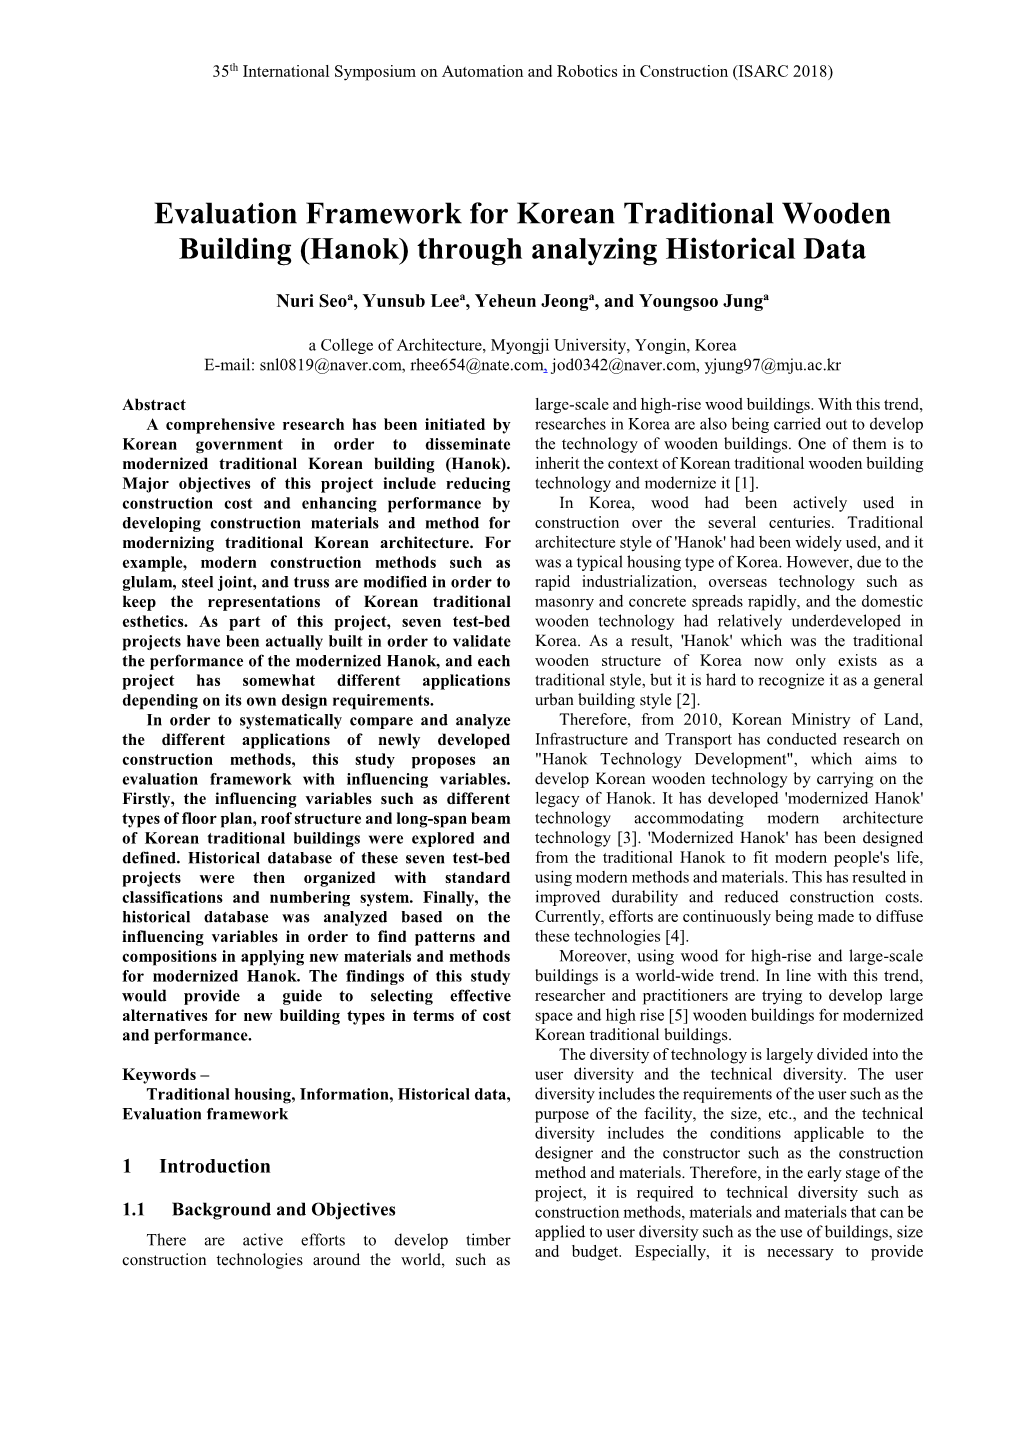 Evaluation Framework for Korean Traditional Wooden Building (Hanok) Through Analyzing Historical Data